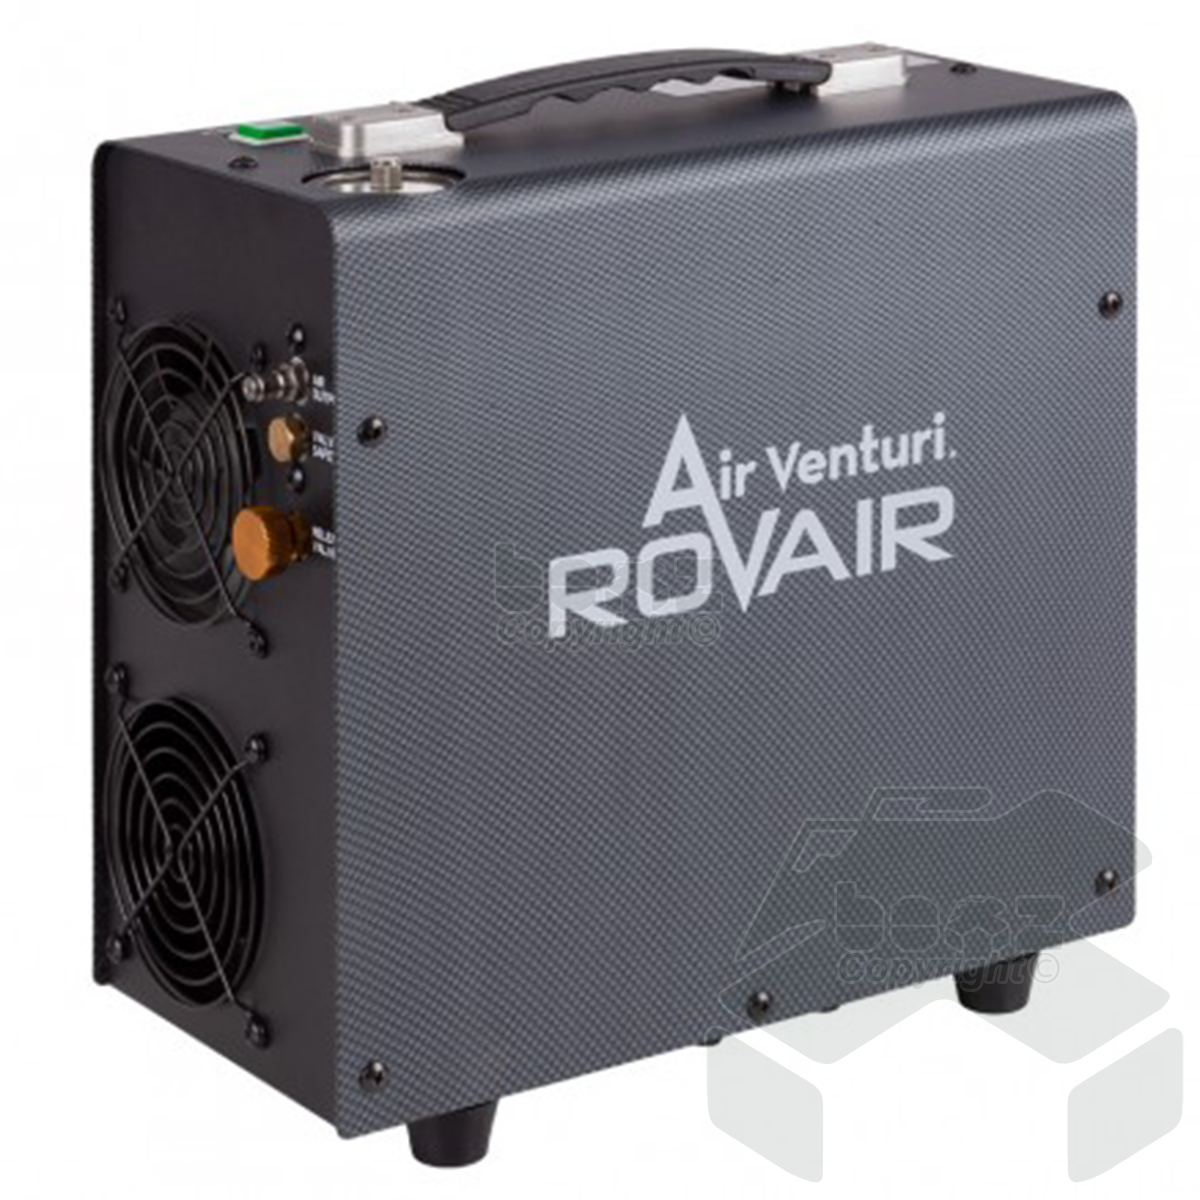 Air Venturi ROVAIR 4500 PSI Portable Compressor